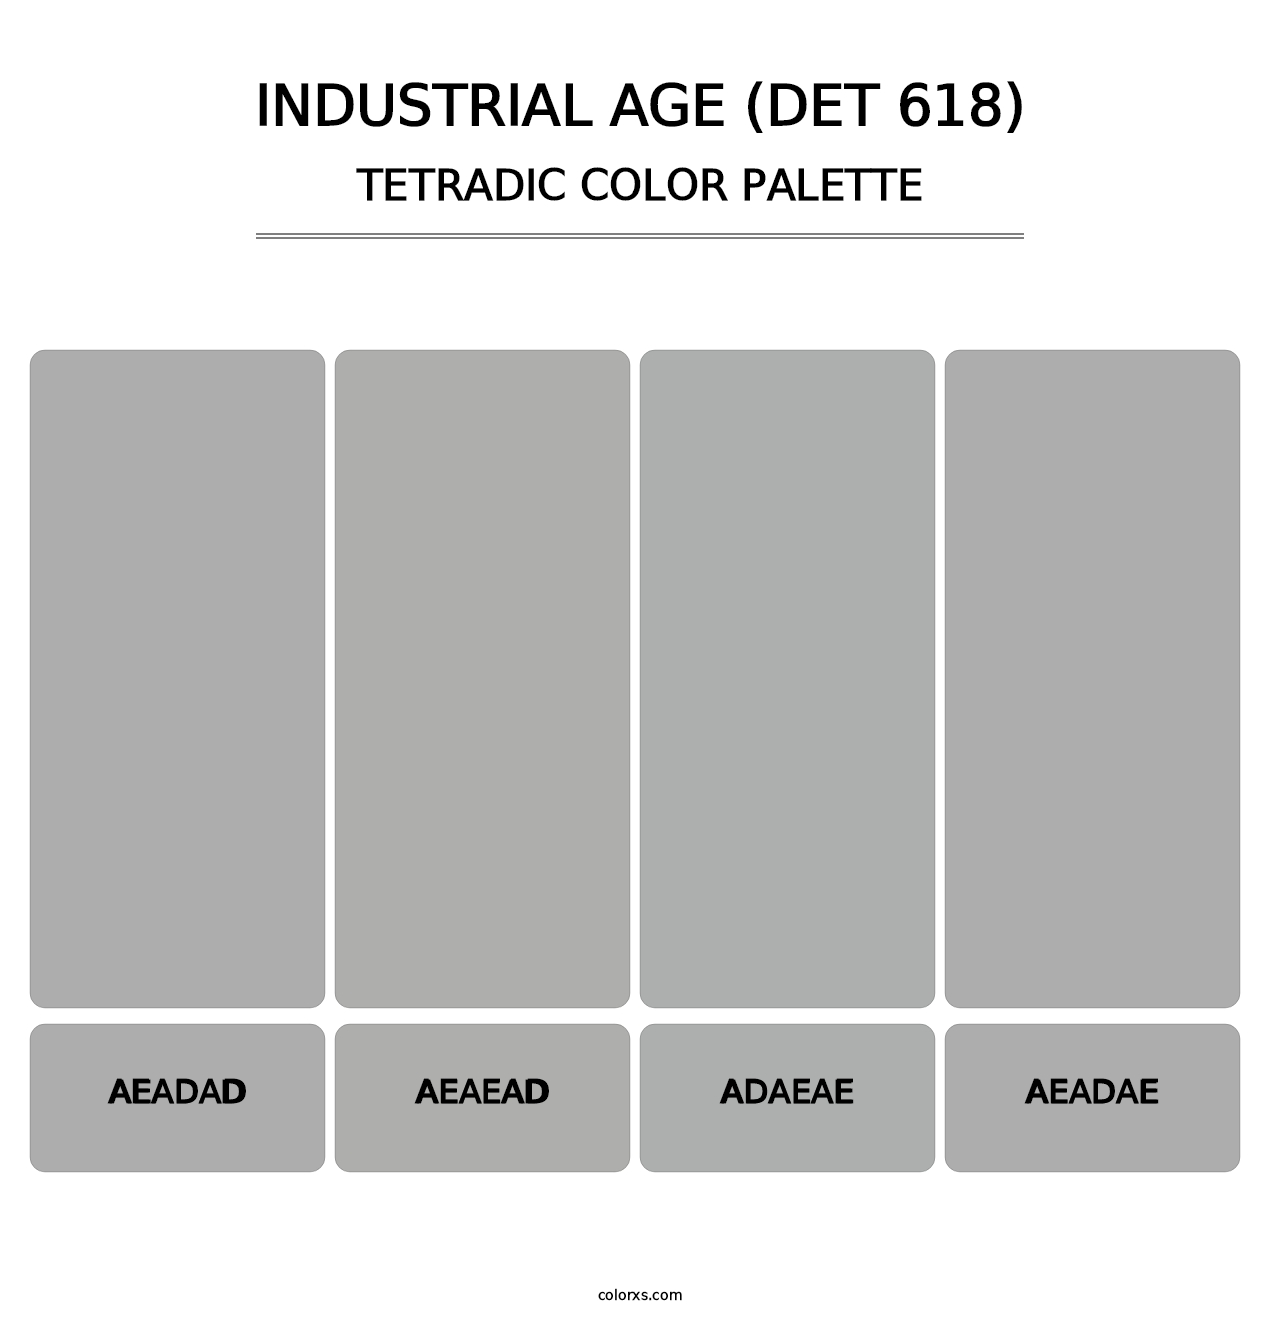 Industrial Age (DET 618) - Tetradic Color Palette